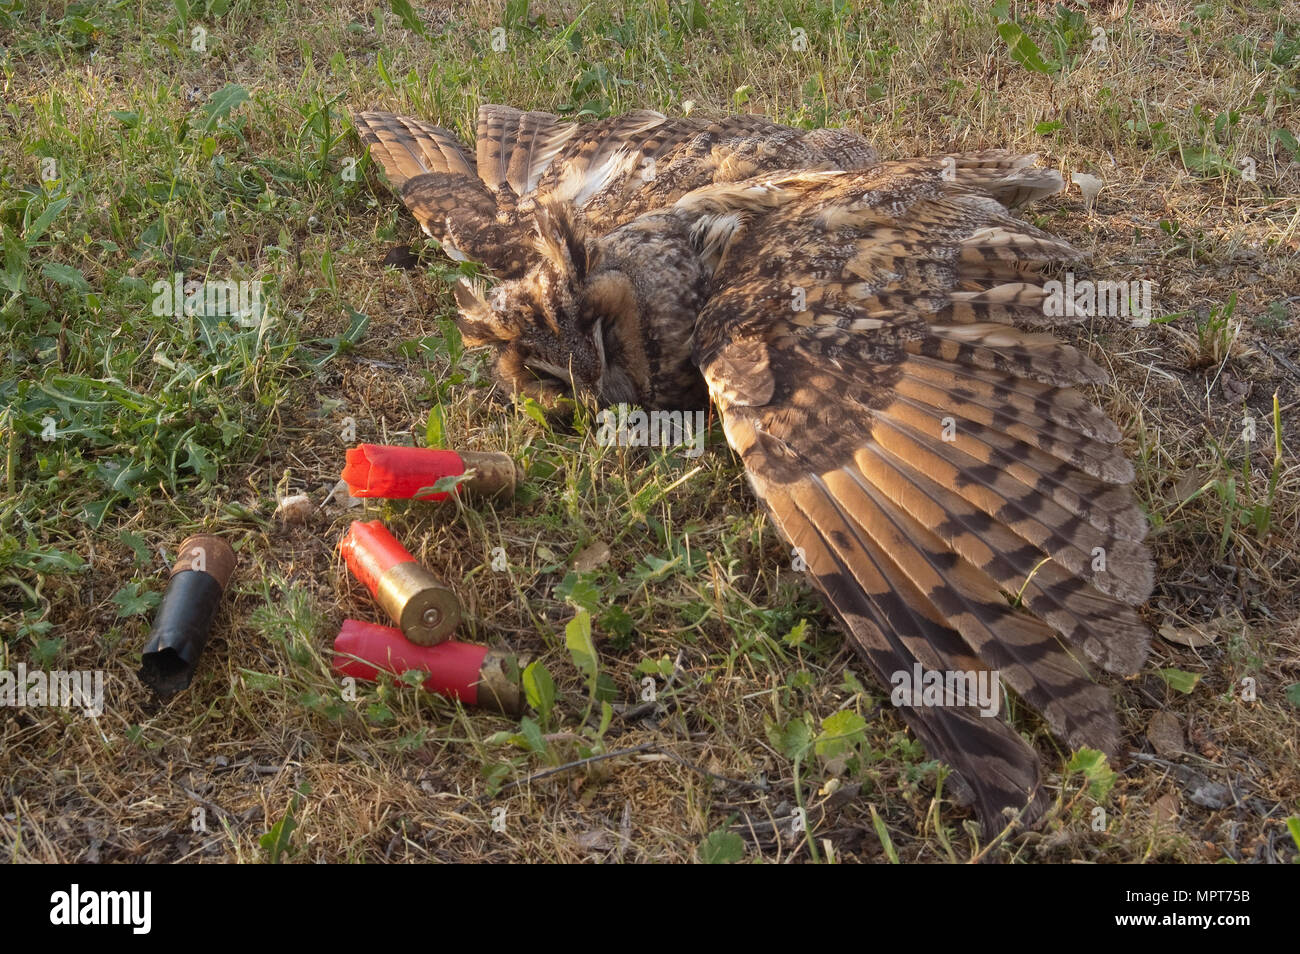 Wild european long-eared owl, Asio otus, killed by shotgun shots Stock Photo